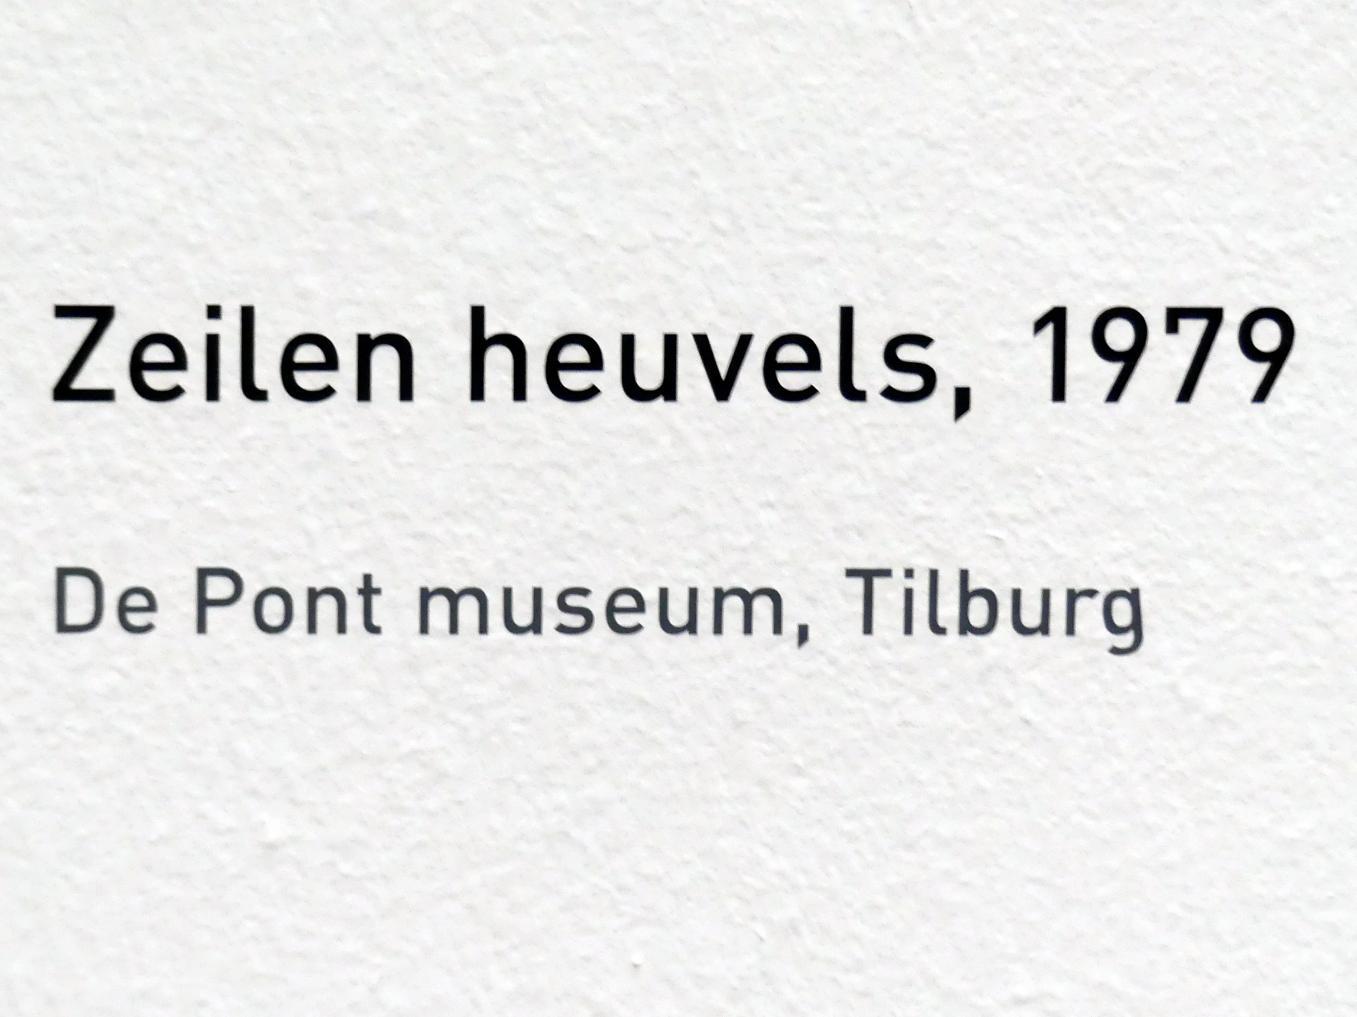 Raoul De Keyser (1964–2012), Zeilen heuvels - Segelhügel, München, Pinakothek der Moderne, Ausstellung "Raoul De Keyser – Œuvre" vom 05.04.-08.09.2019, Saal 23, 1979, Bild 2/2